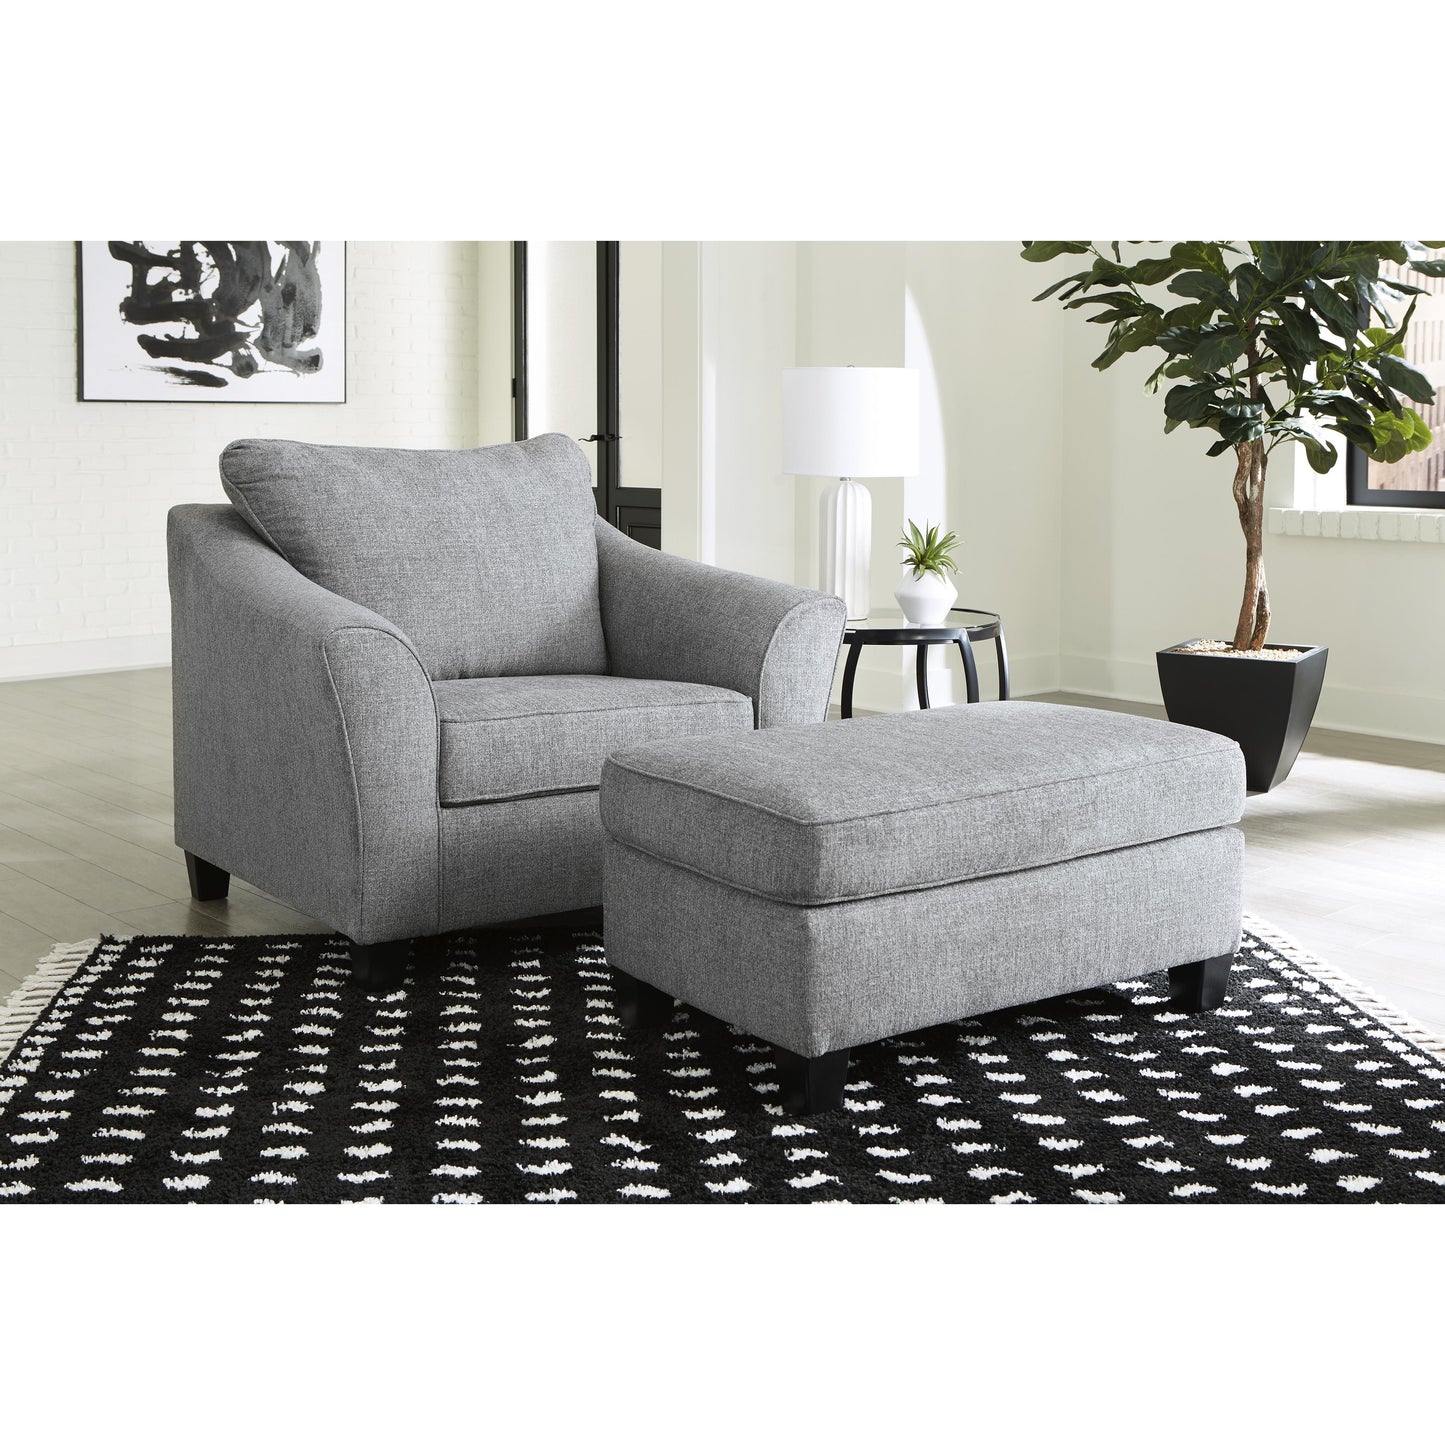 Benchcraft Mathonia Stationary Fabric Chair 5190323